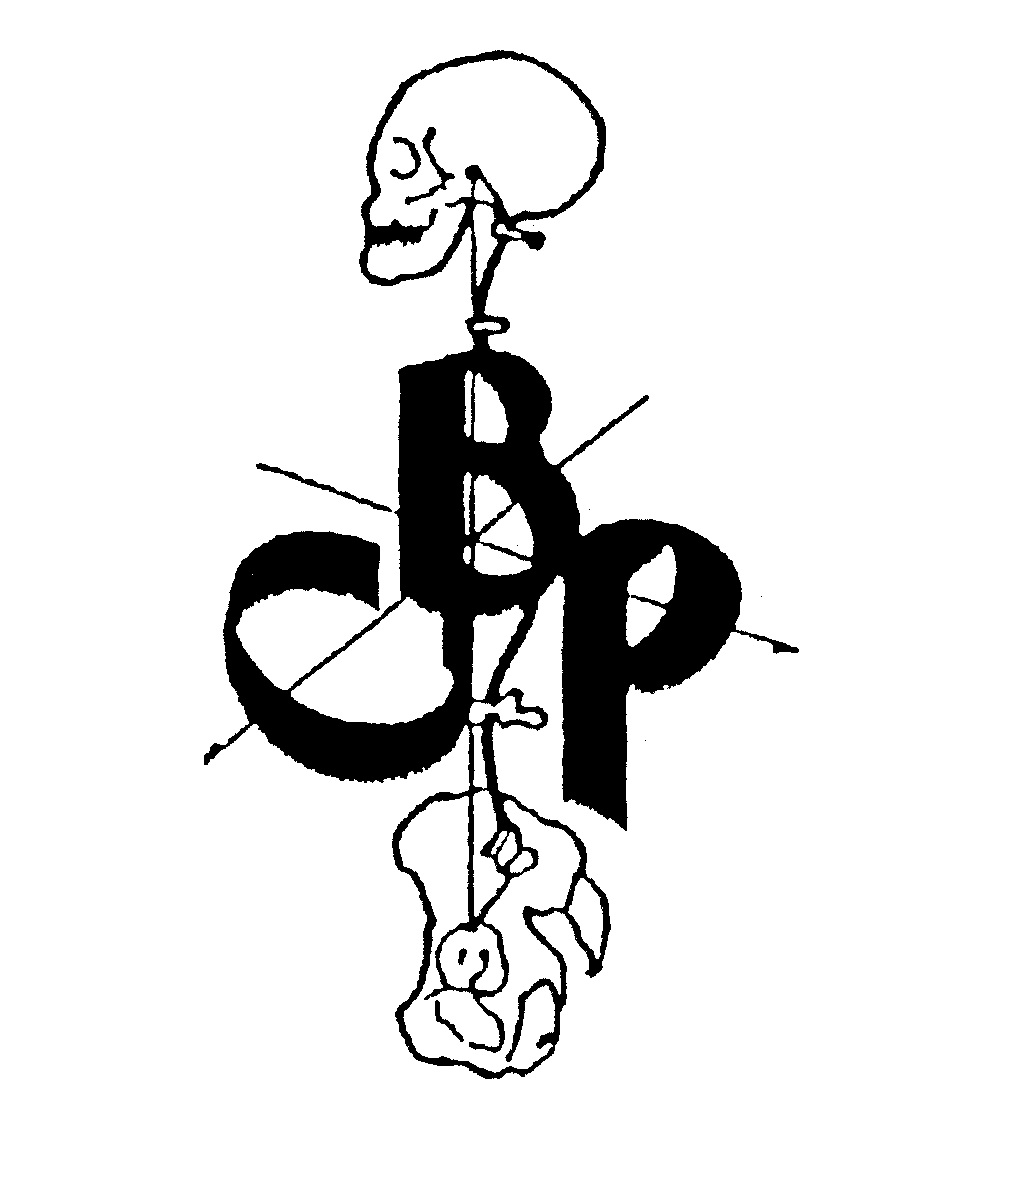 Trademark Logo CBP